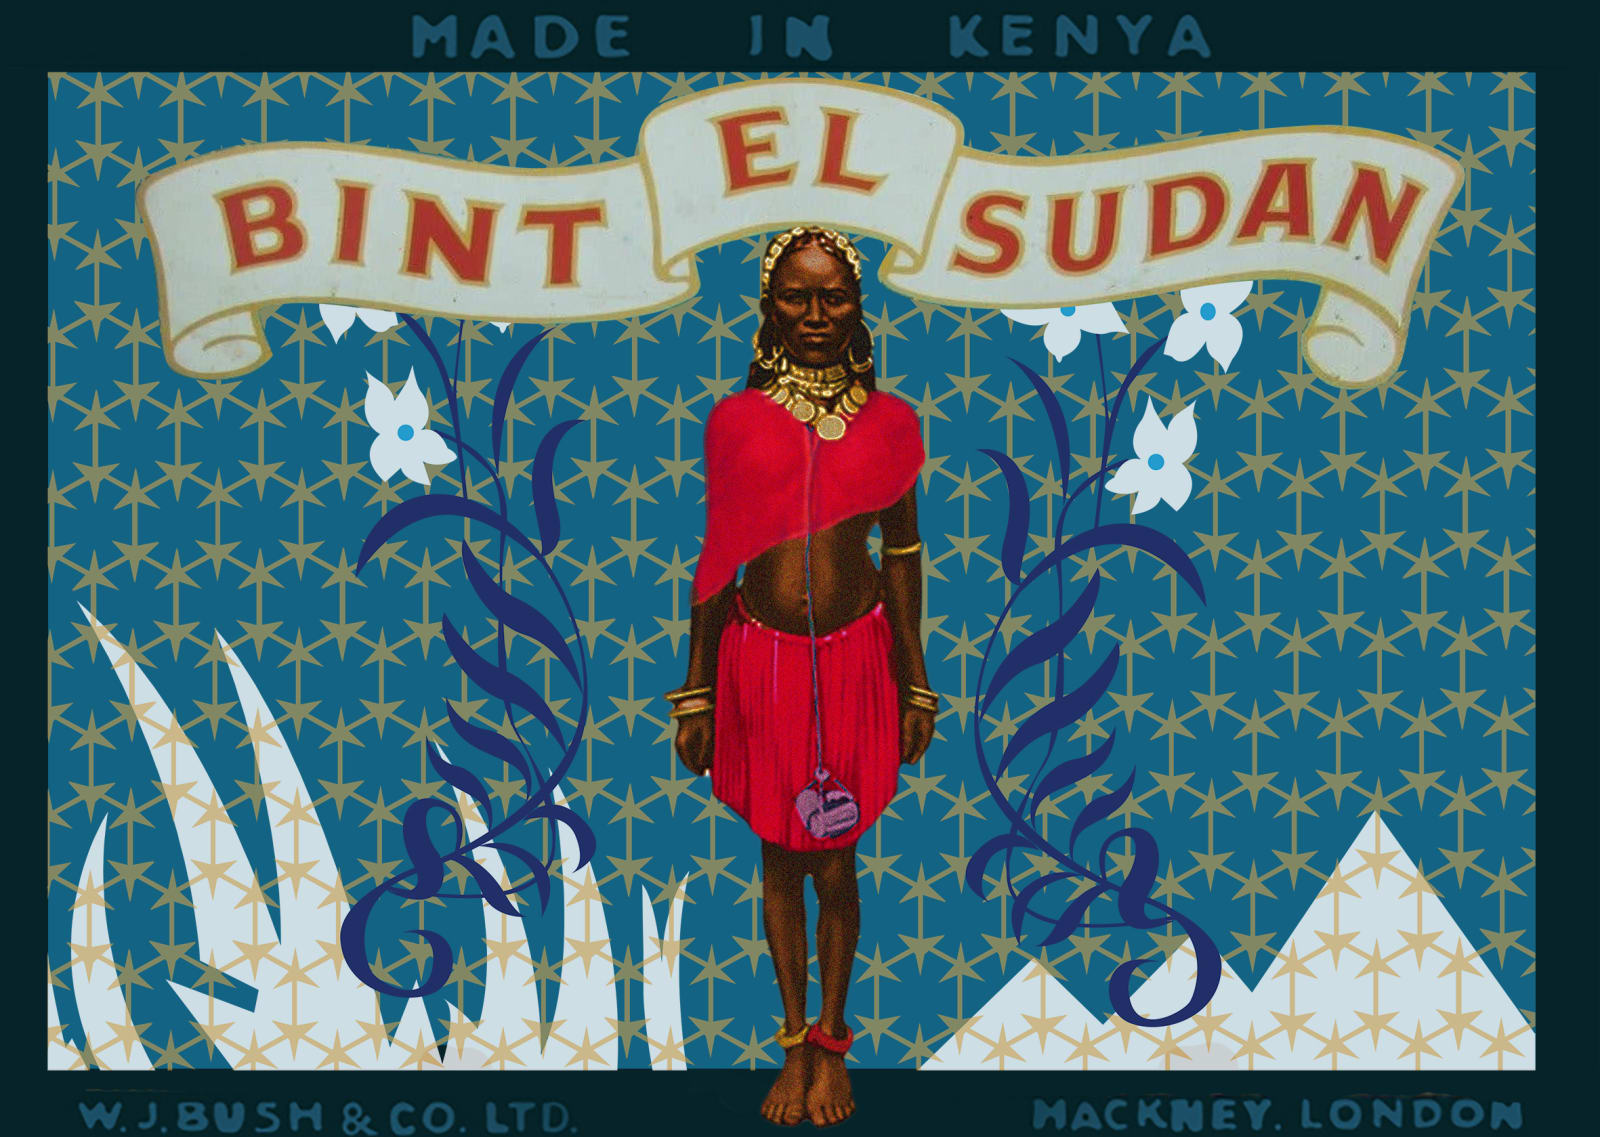 Amado Alfadni, Bint El Sudan - Made in Kenya Label, 2019